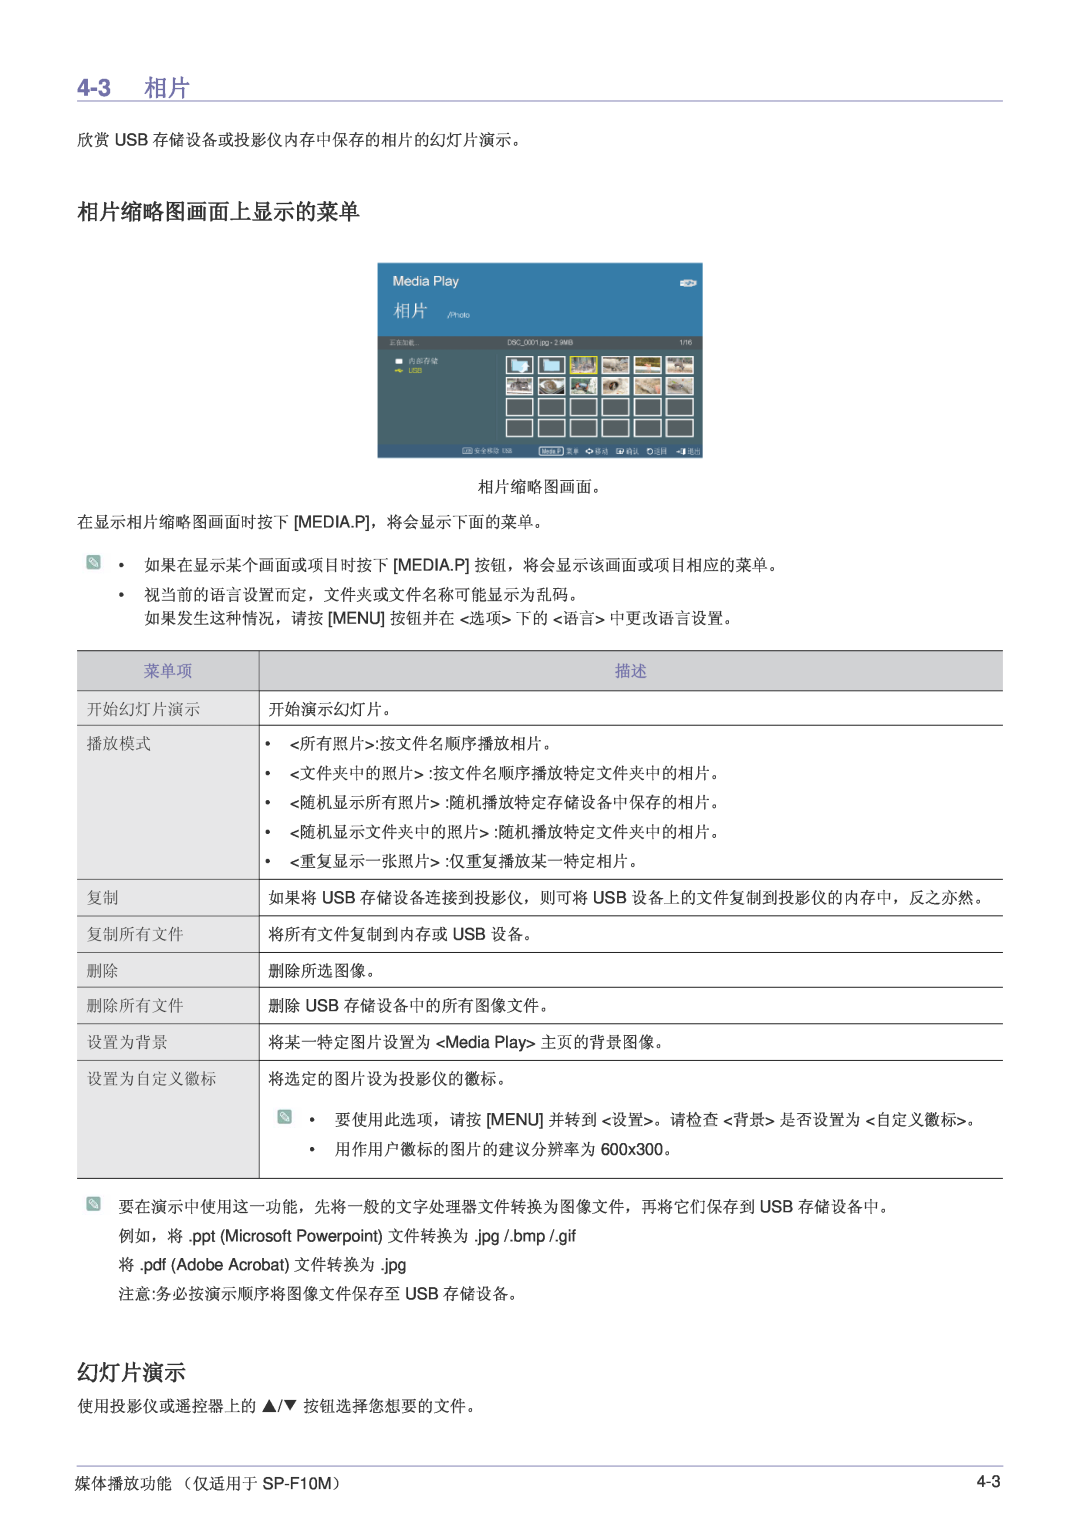 Samsung SP1005XWX/EN, SP1055XWX/EN manual 4-3 相片, 相片缩略图画面上显示的菜单, 幻灯片演示 